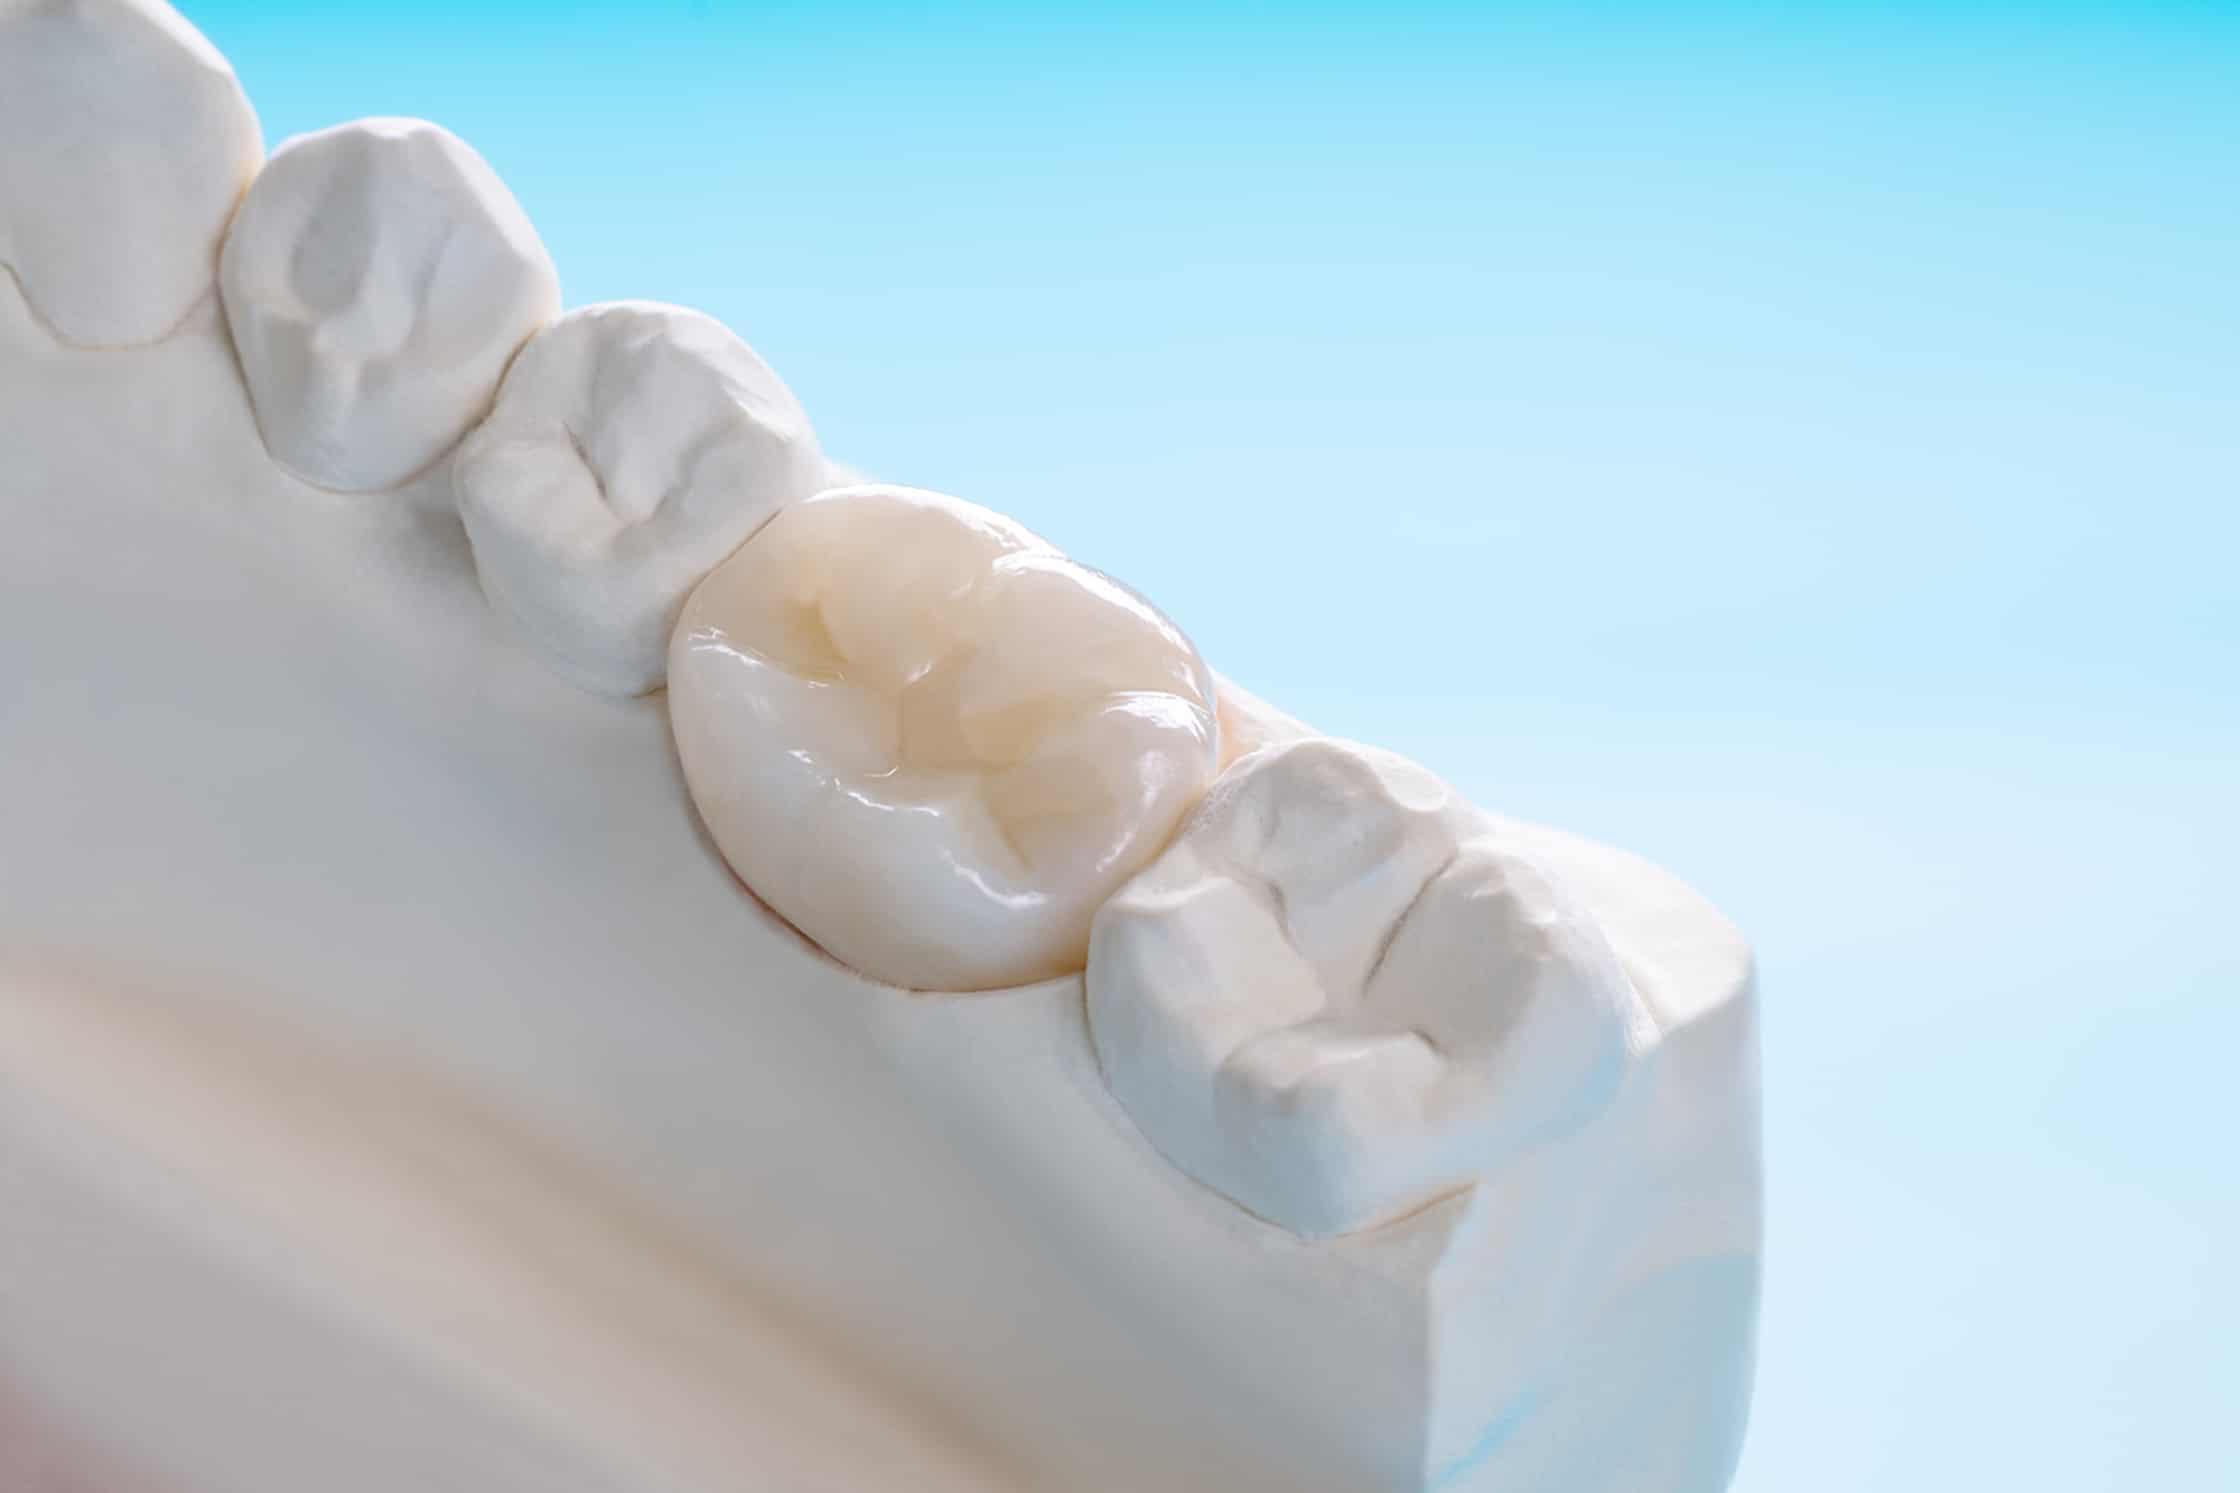 Restorative Dental Crowns available in Ridgeland, MS, at Murphey Dental Aesthetics